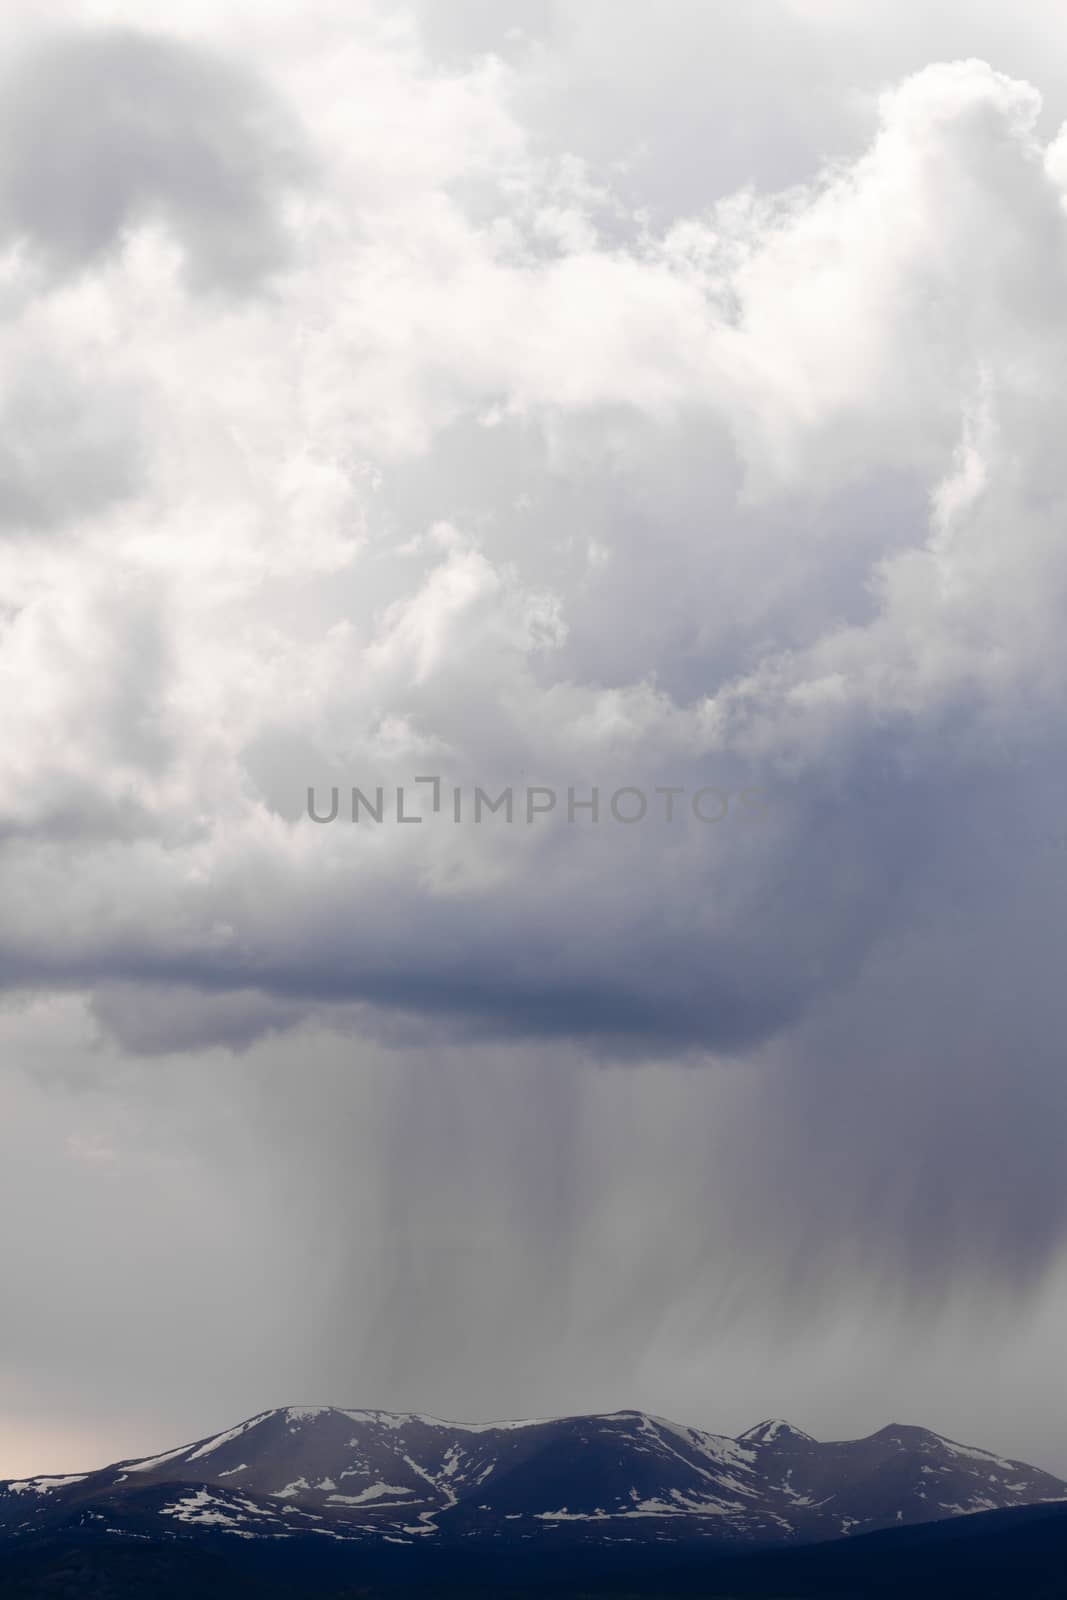 Dramatic rain storm cumulonimbus cloud formation bringing bad weather towering over snowy mountains in Yukon Territory Canada